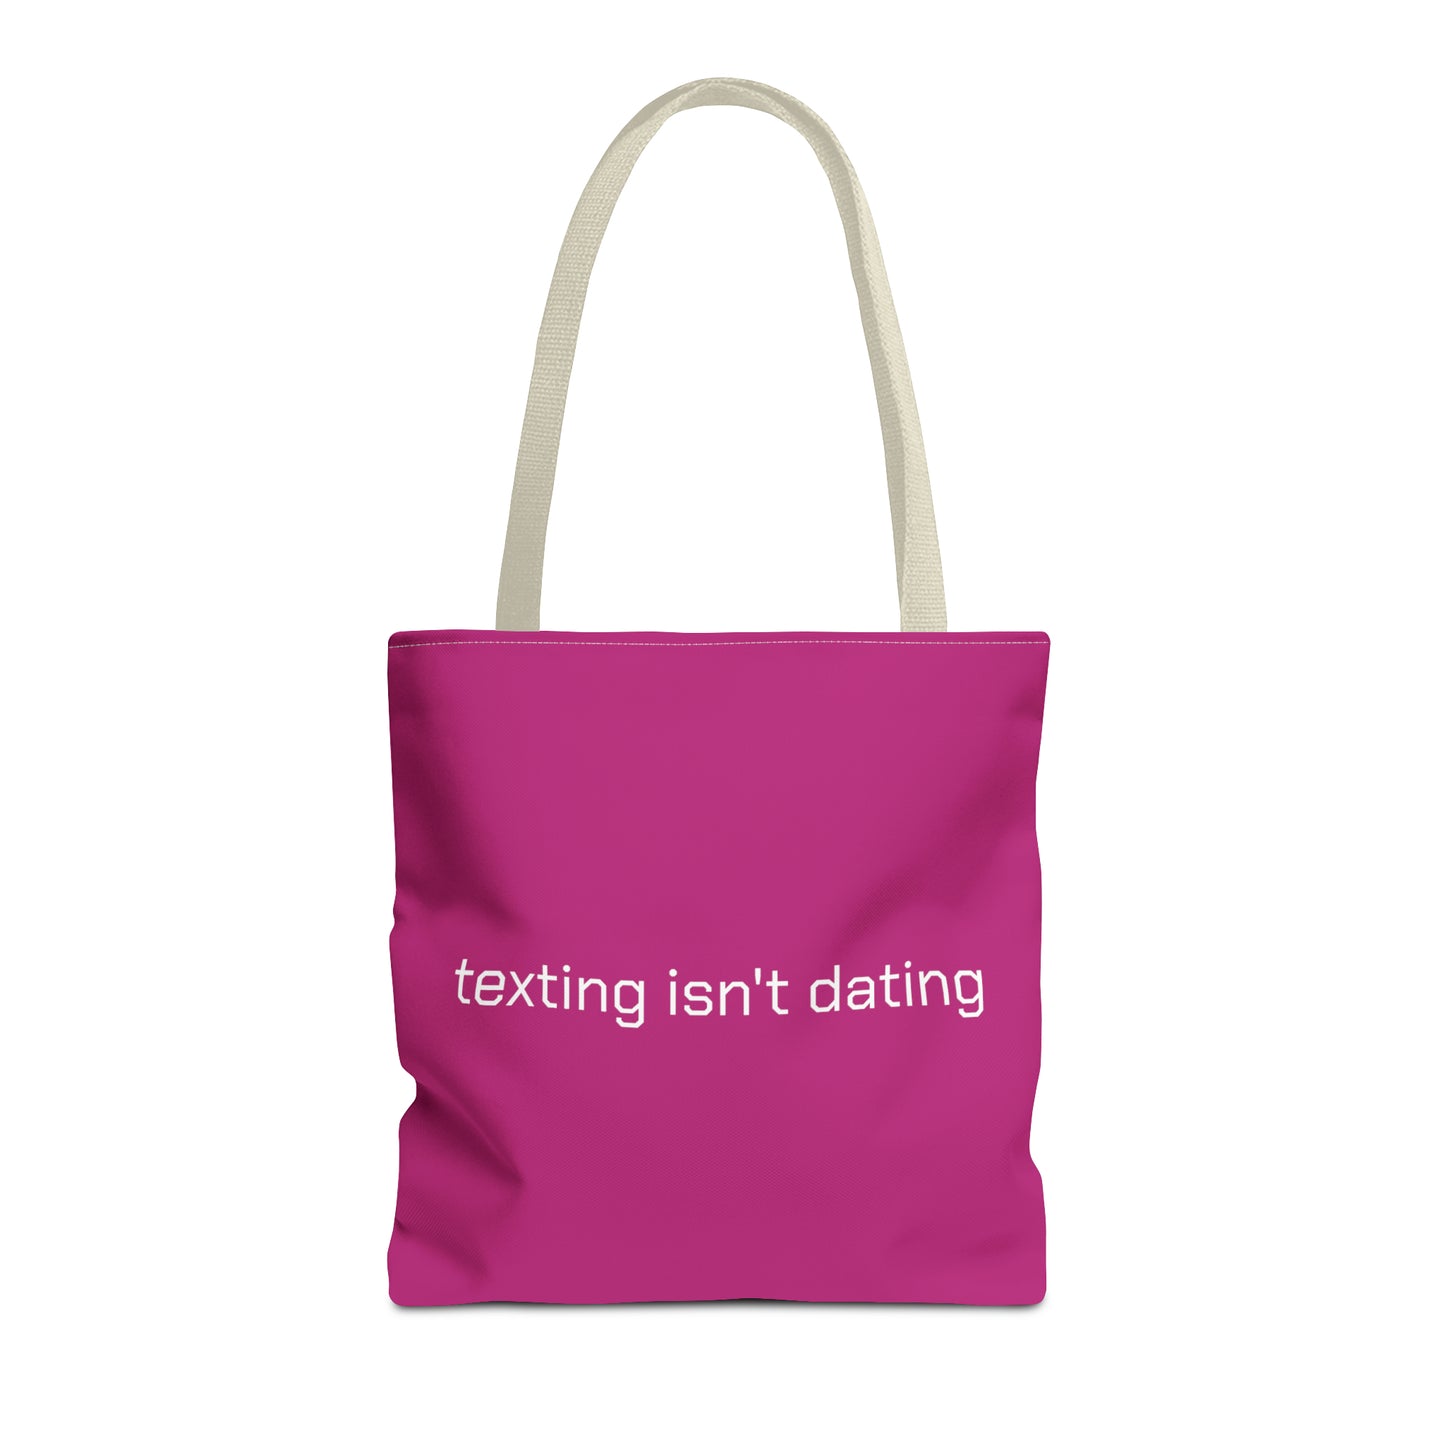 texting isn't dating Tote Bag